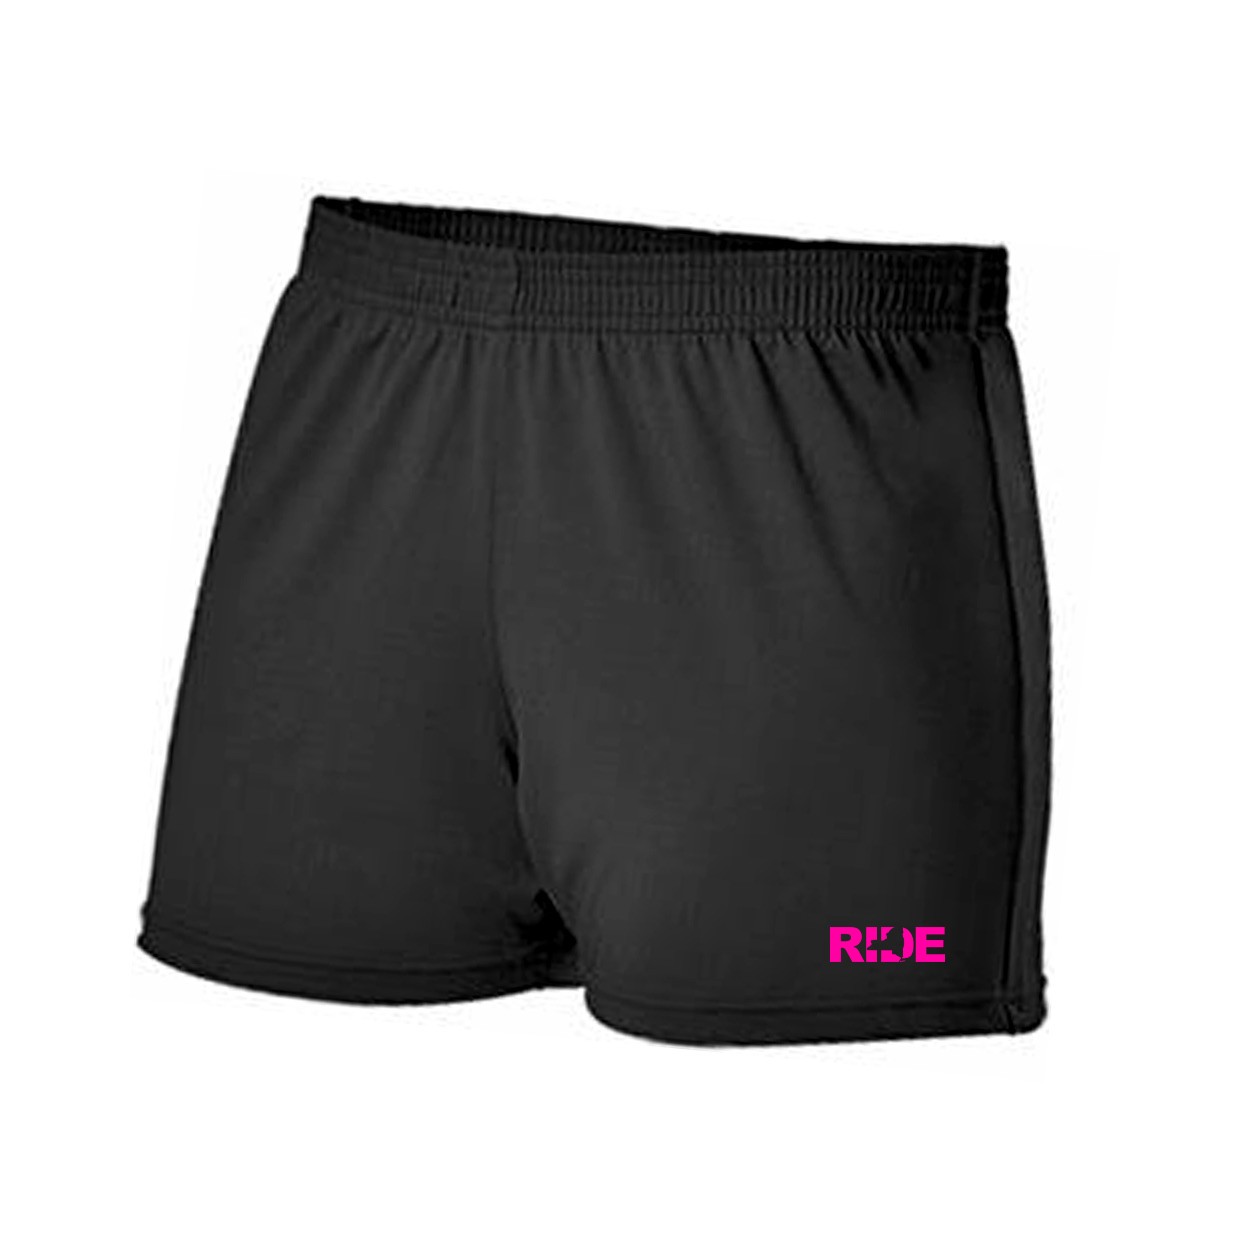 Ride New York Classic Women's Cheer Shorts Black (Pink Logo)